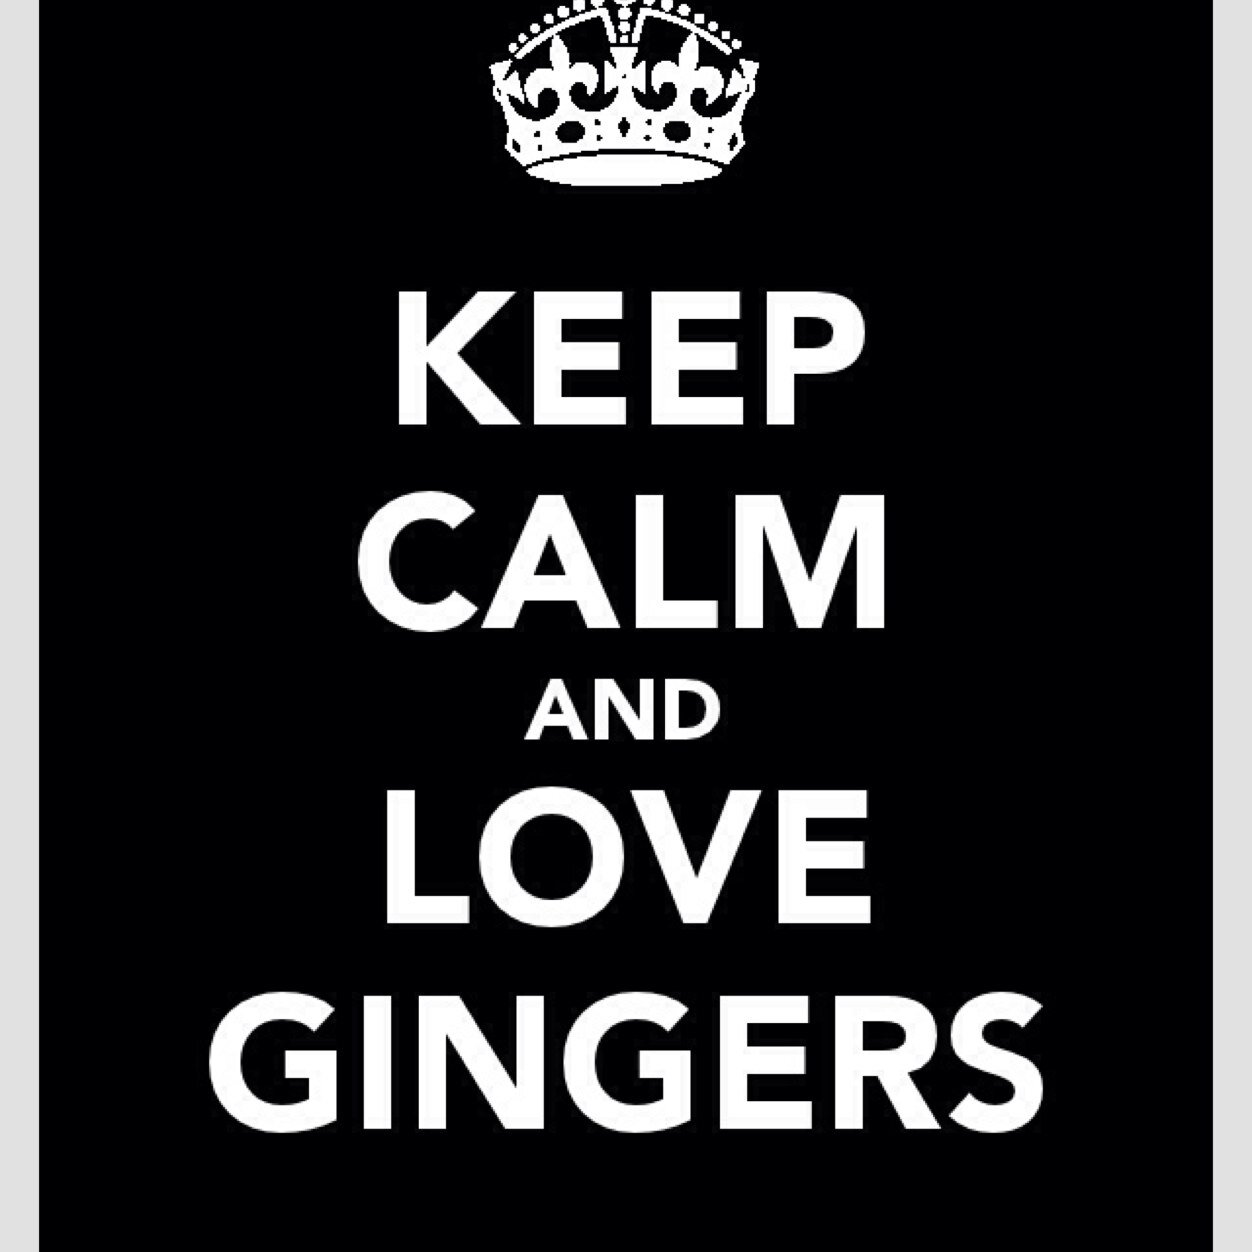 Everybody's favorite Ginger. Kiss me, I'm Irish. #FireUpChips http://t.co/i3p0sISbL1